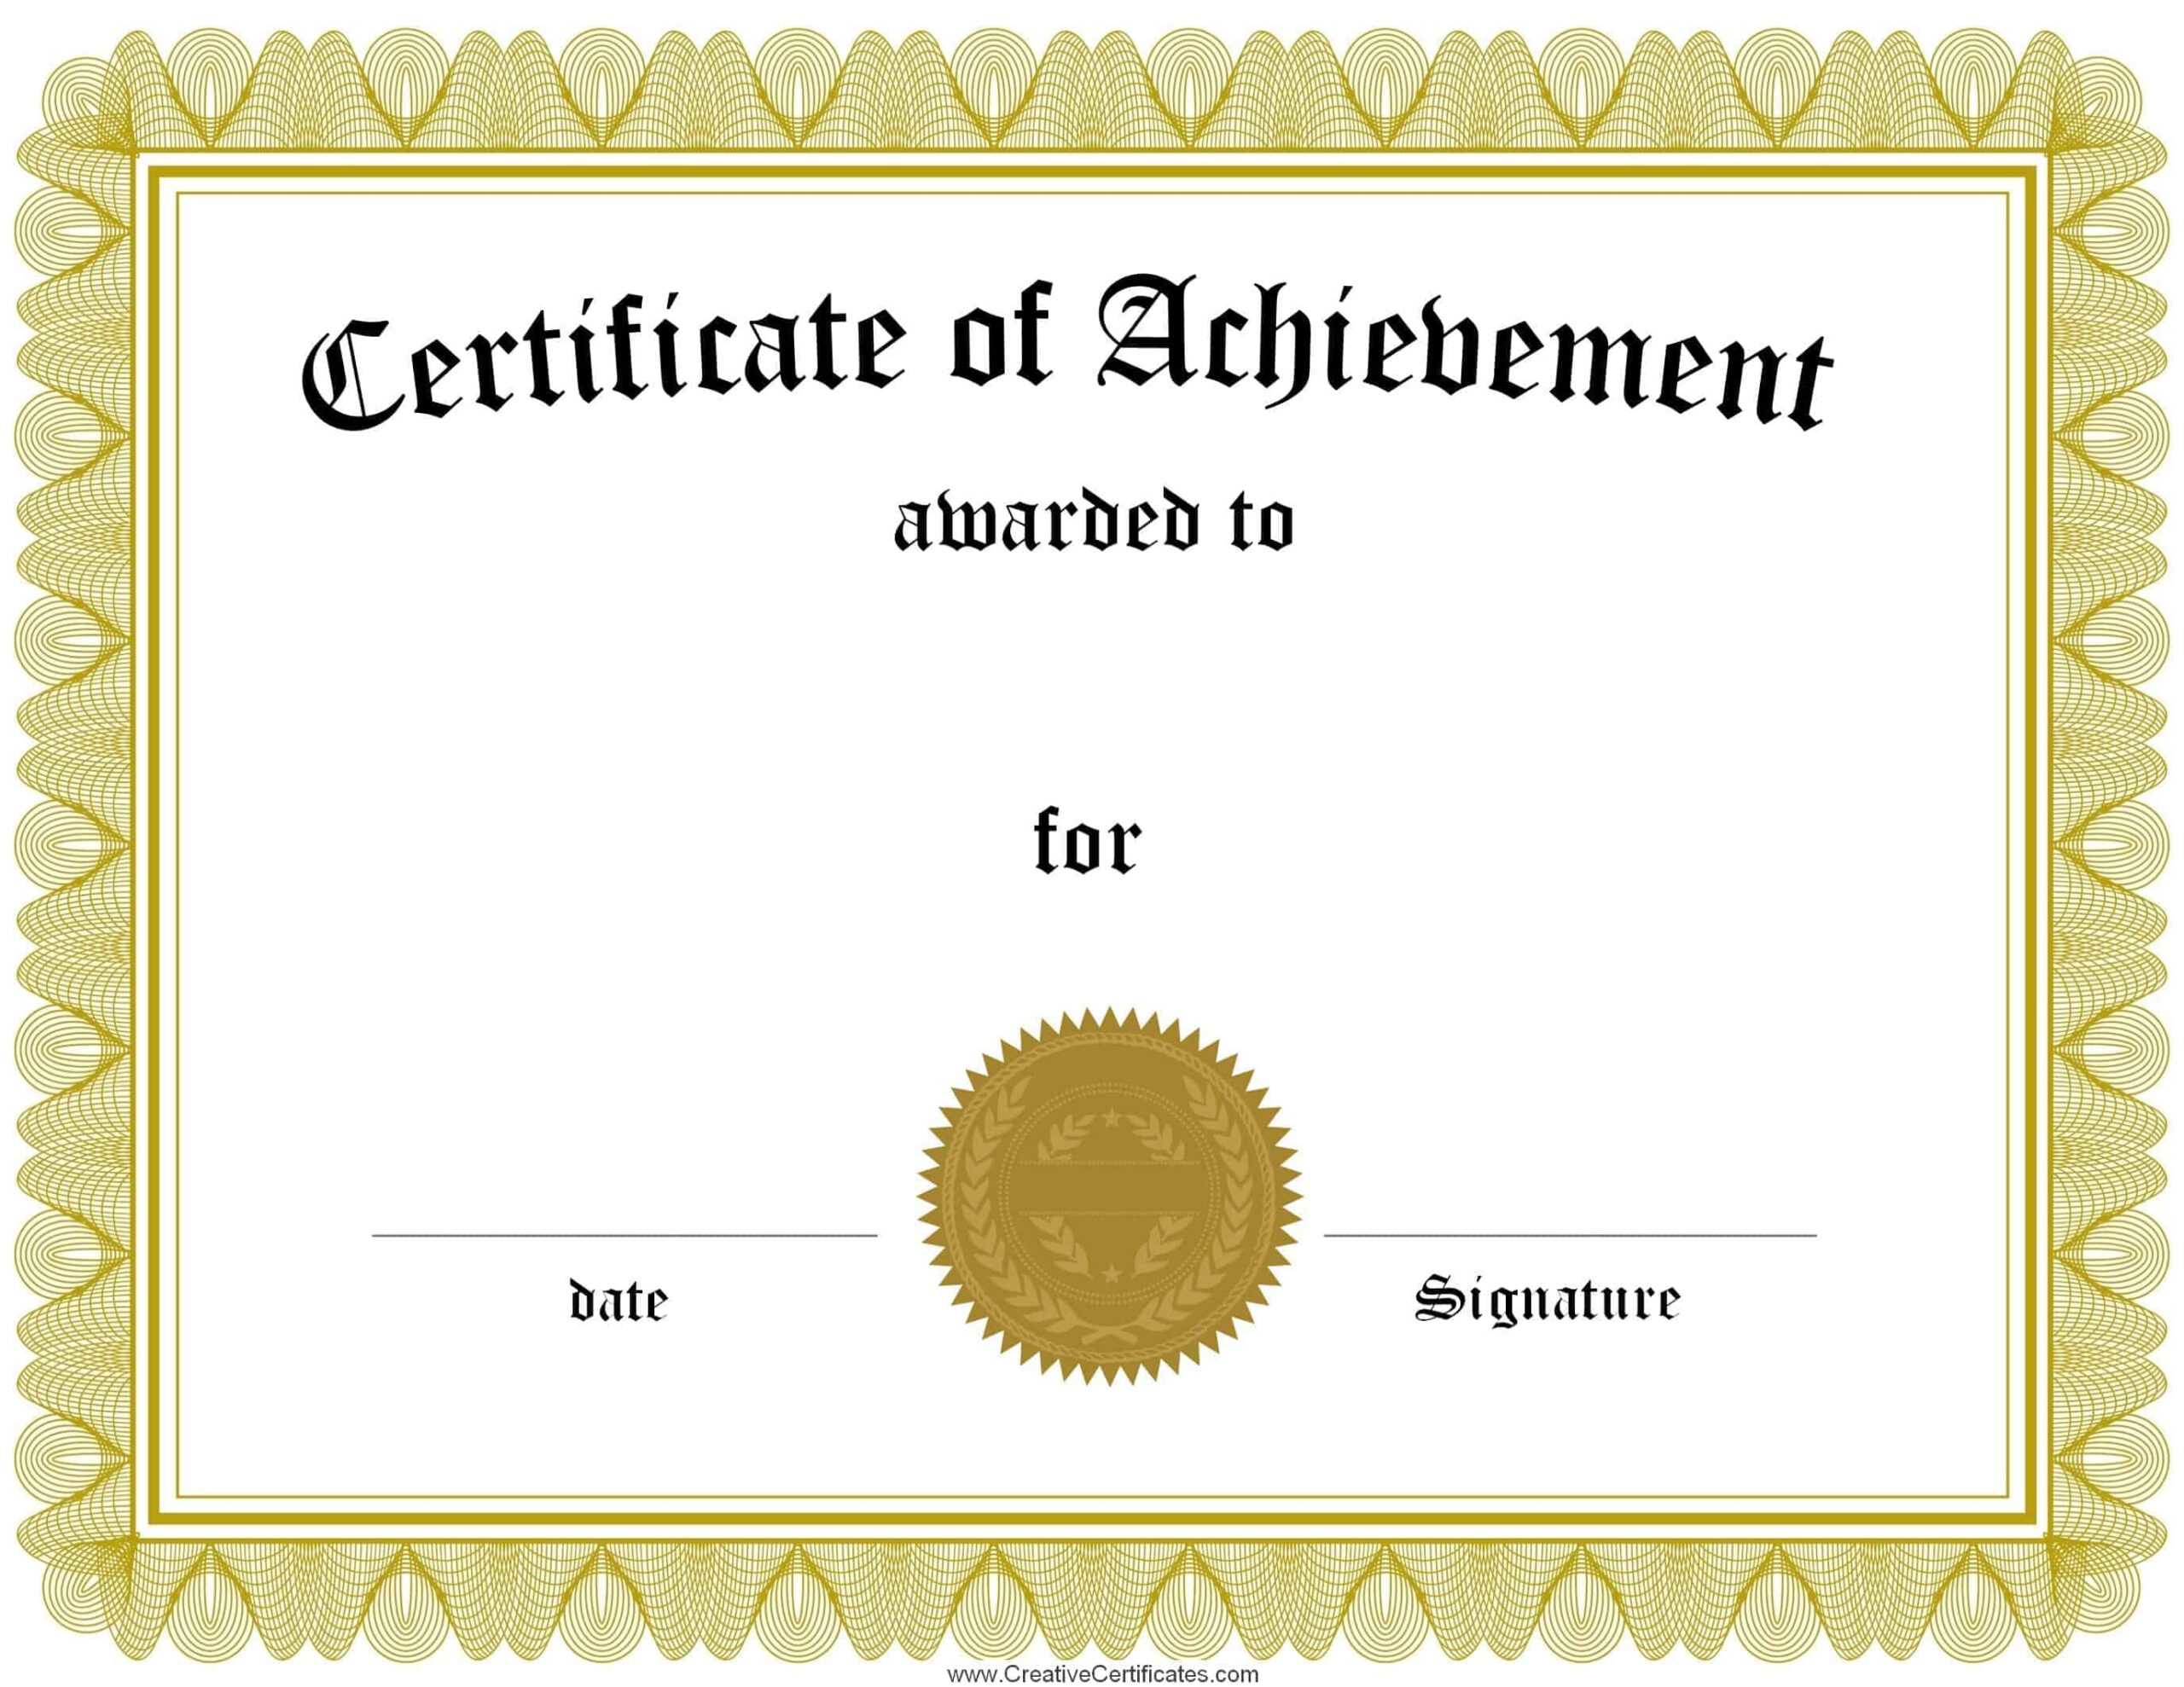 Free Customizable Certificate Of Achievement With Certificate Of Achievement Template For Kids